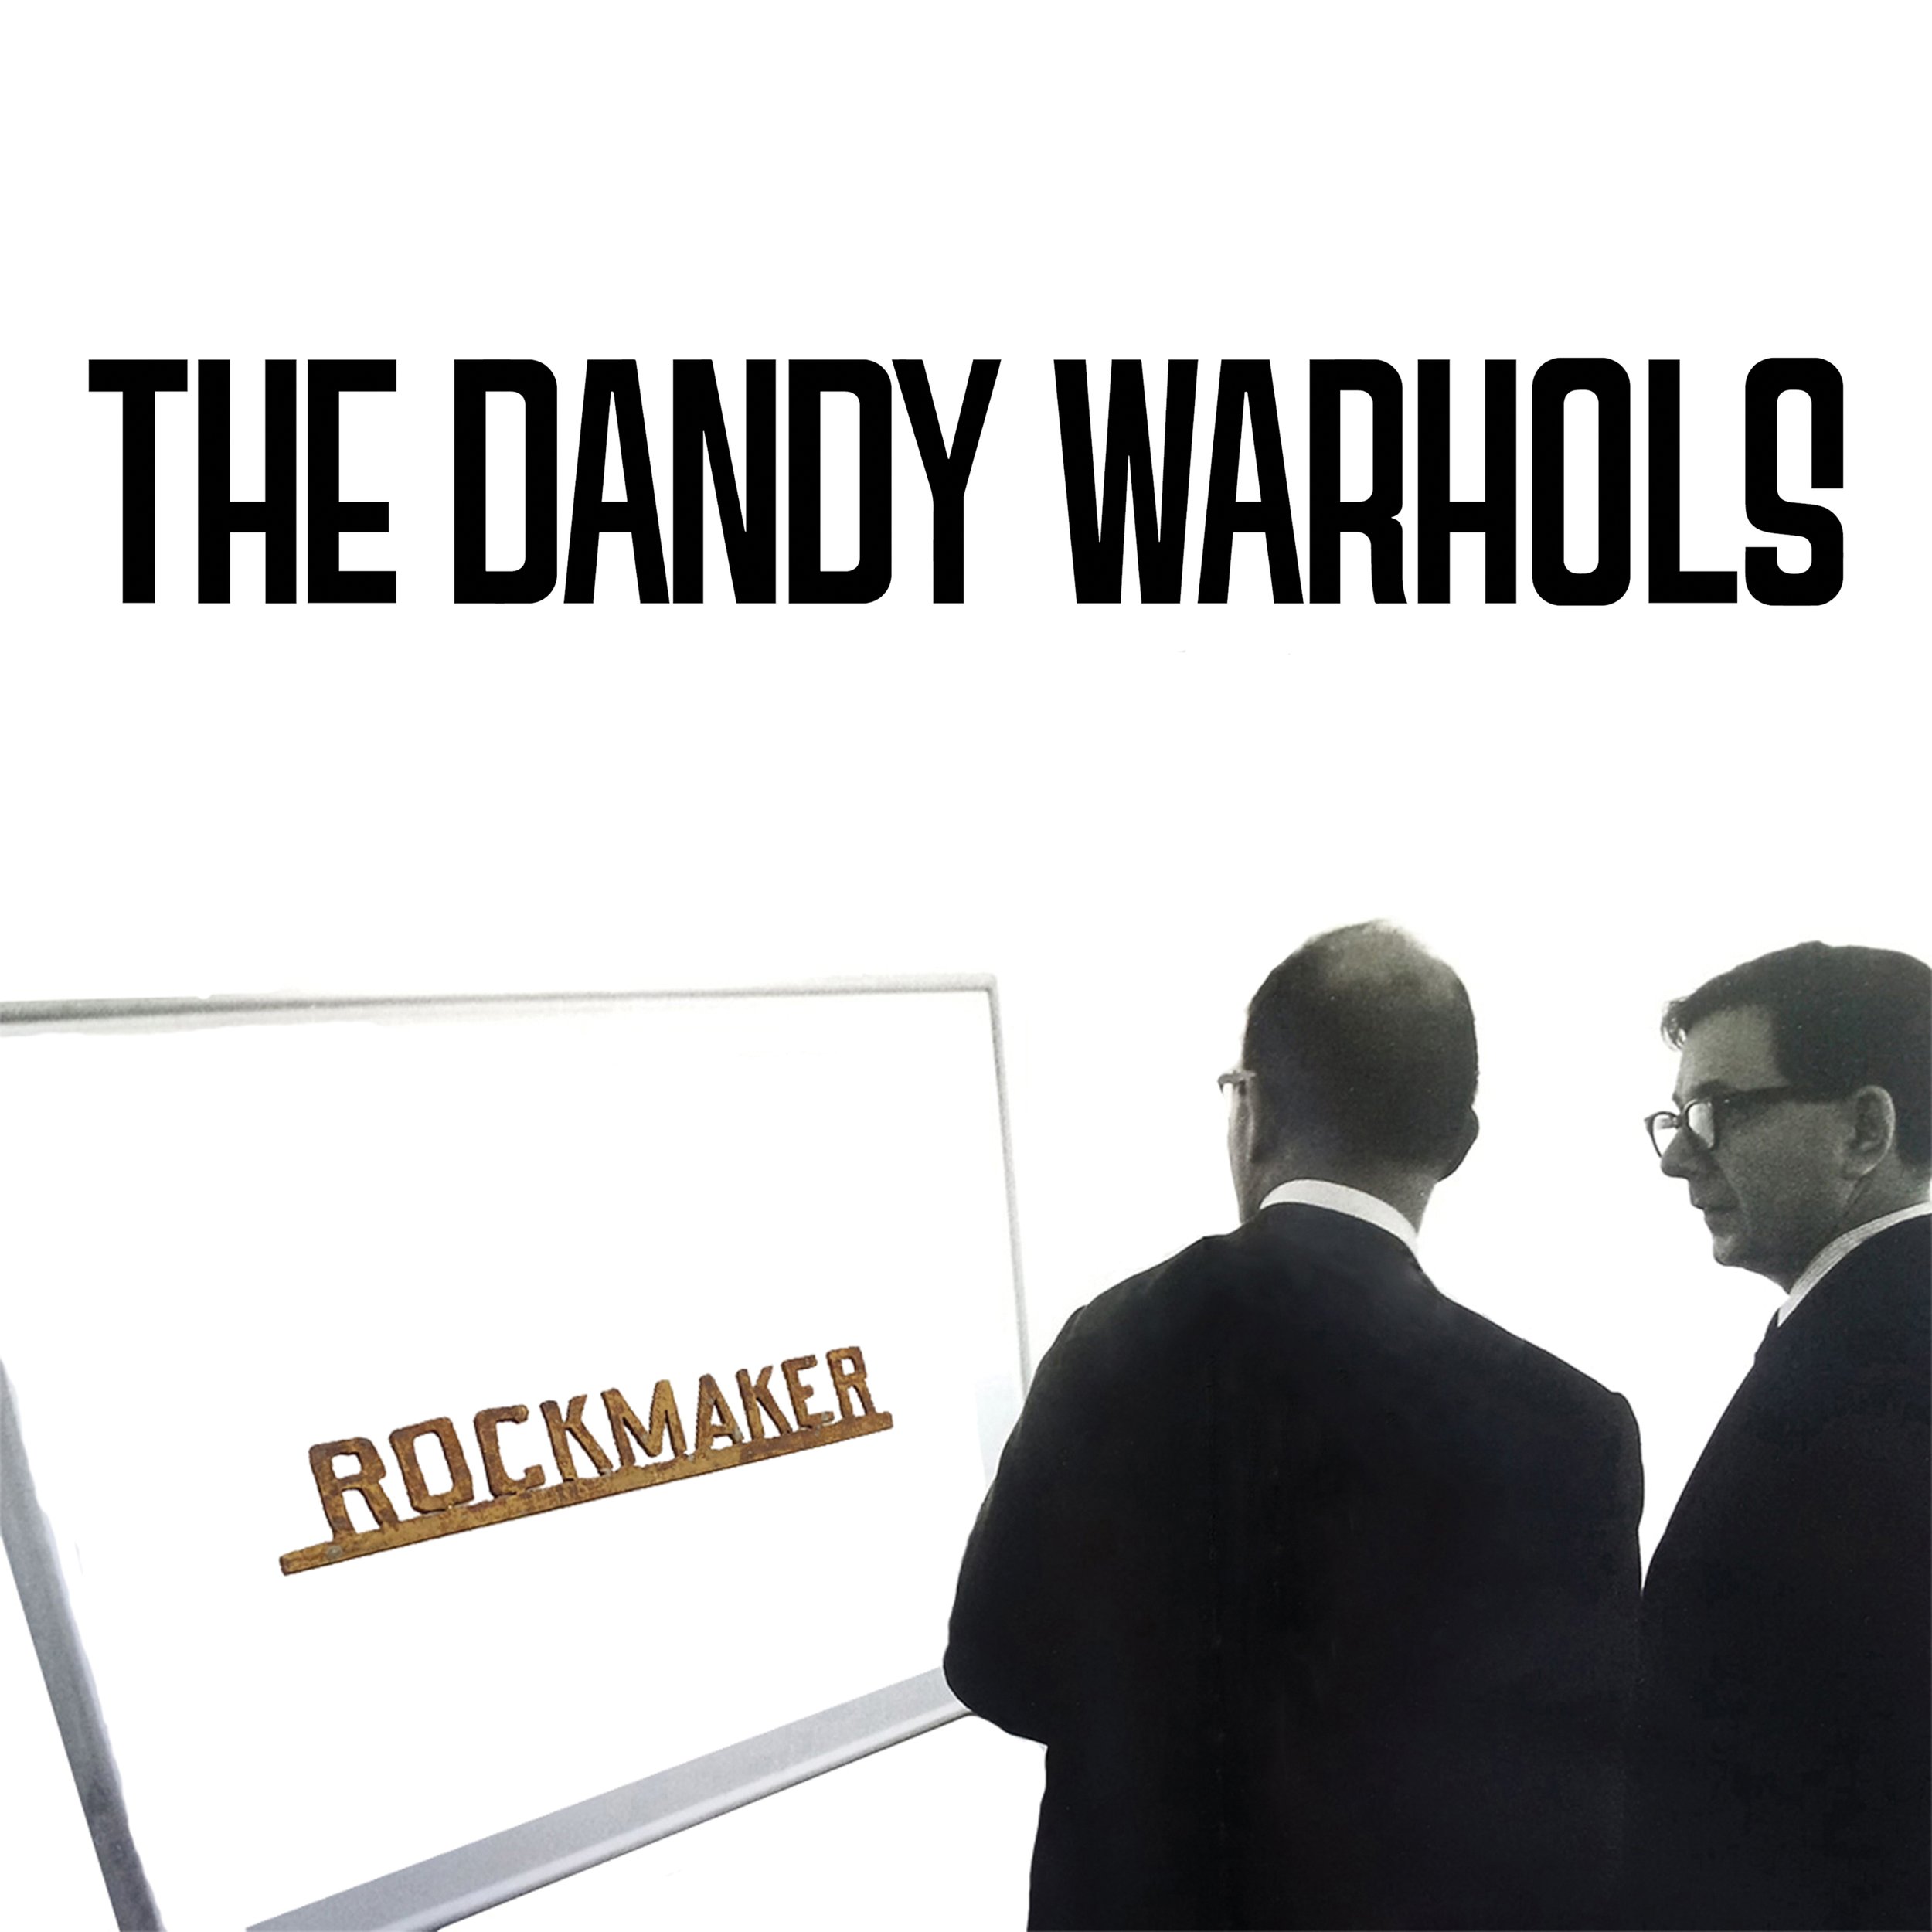 The Dandy Warhols - ROCKMAKER Cover Art.jpg